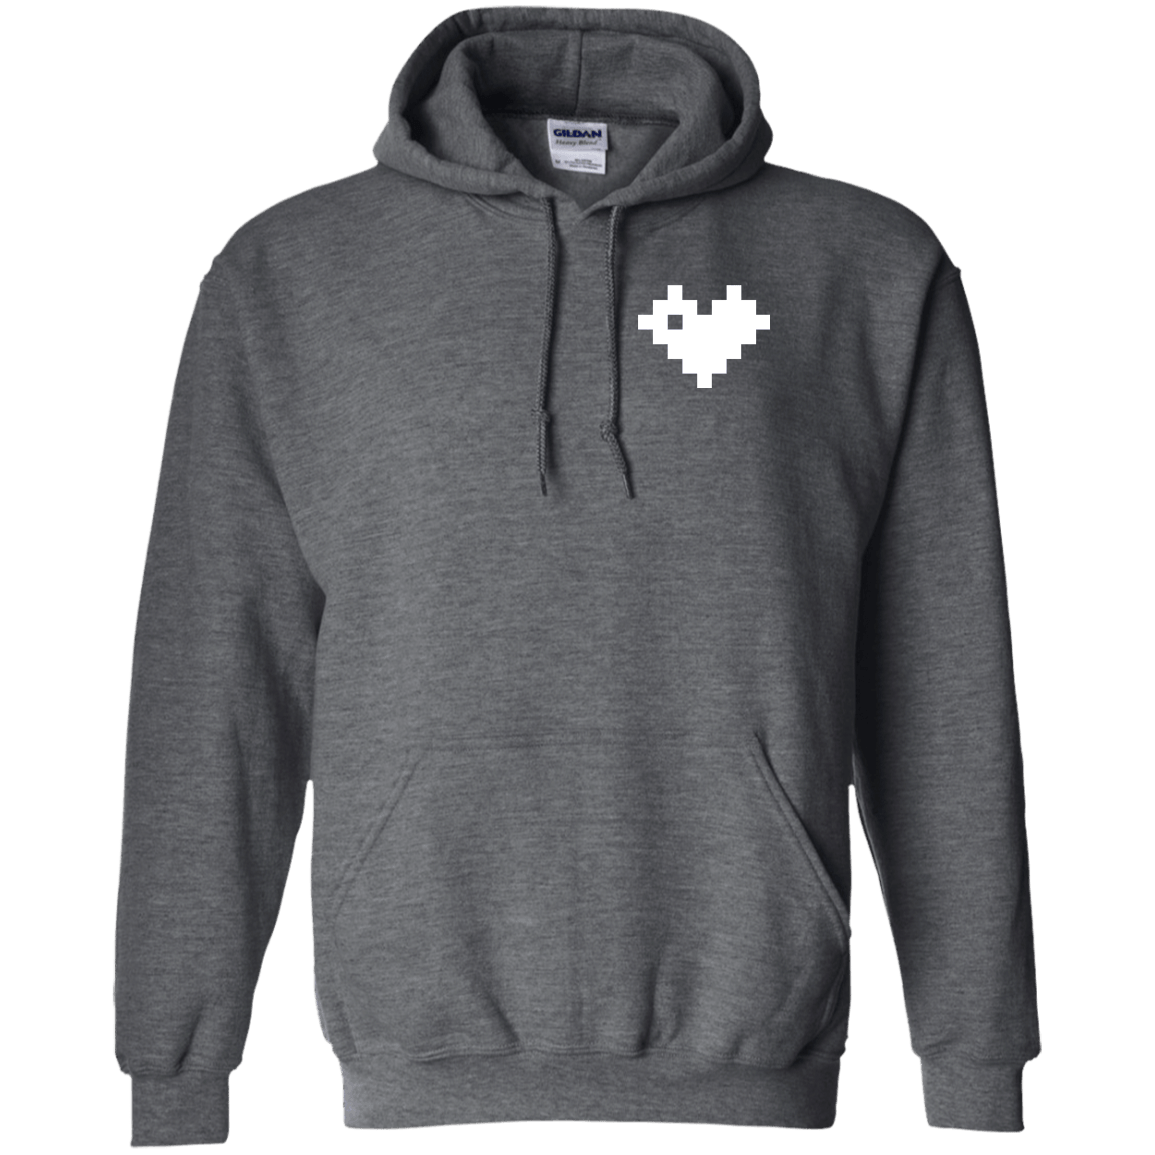 Pixel heart – Tee++ 1 in No. Programming T-Shirts 